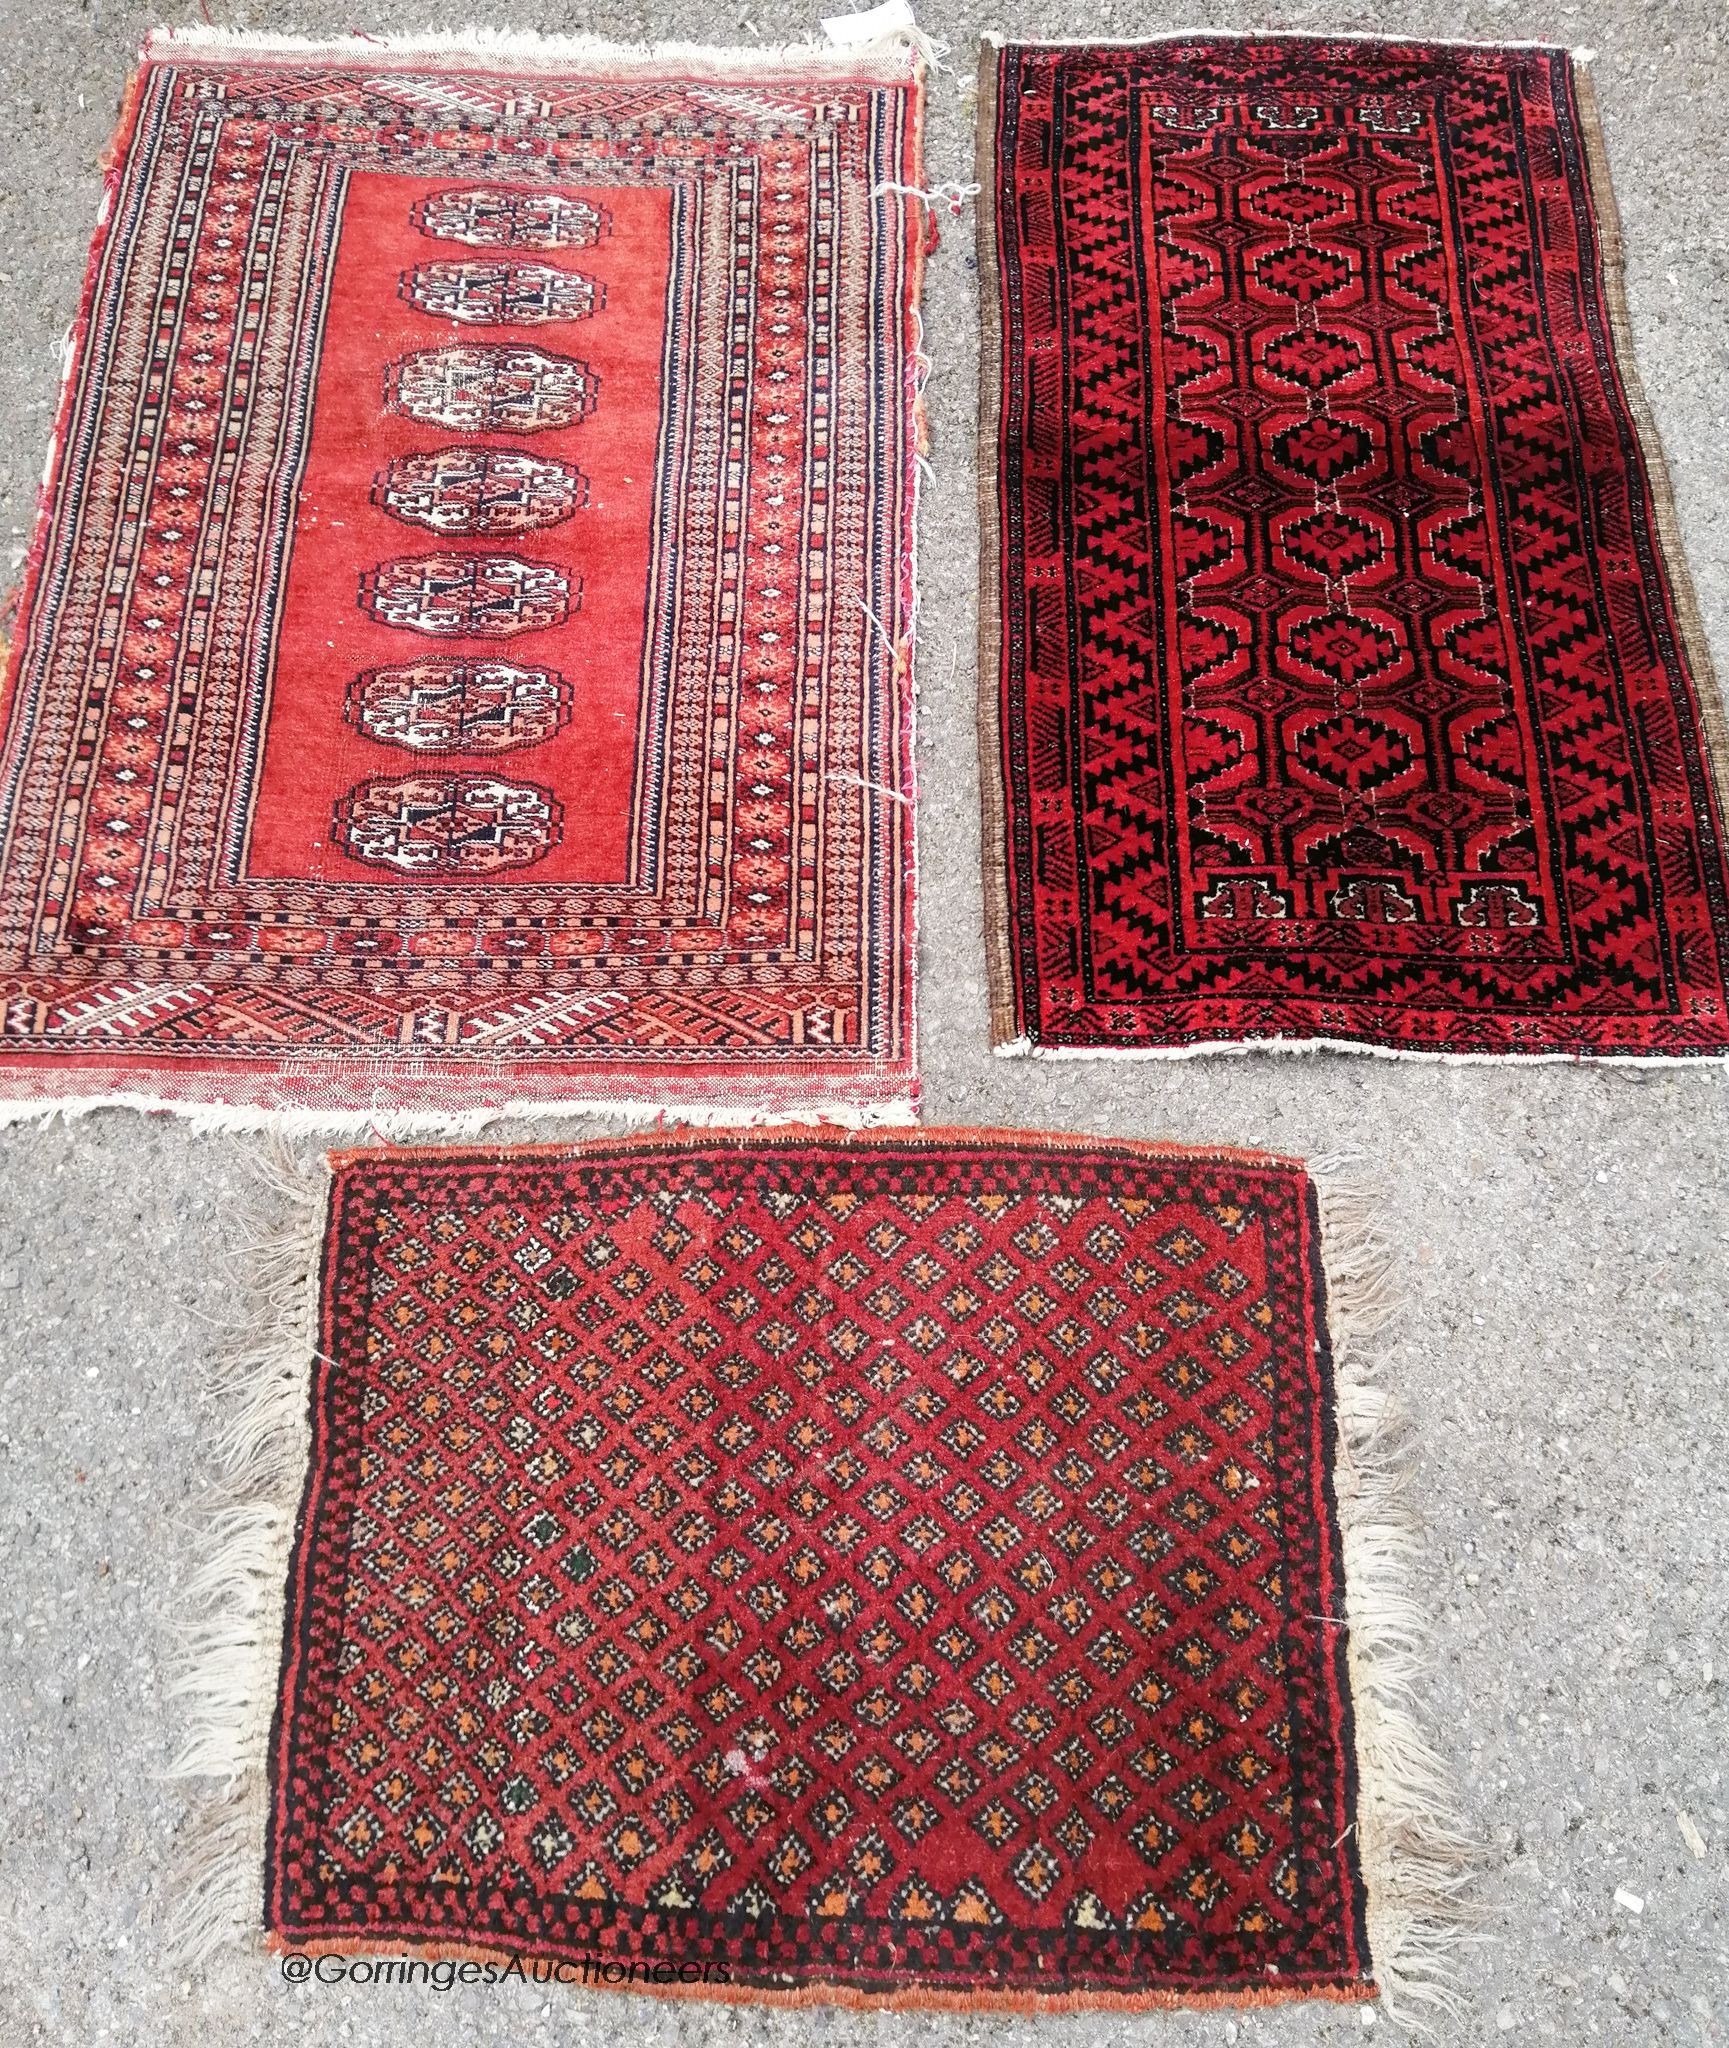 Three Bokhara rugs, largest 90 x 60cm